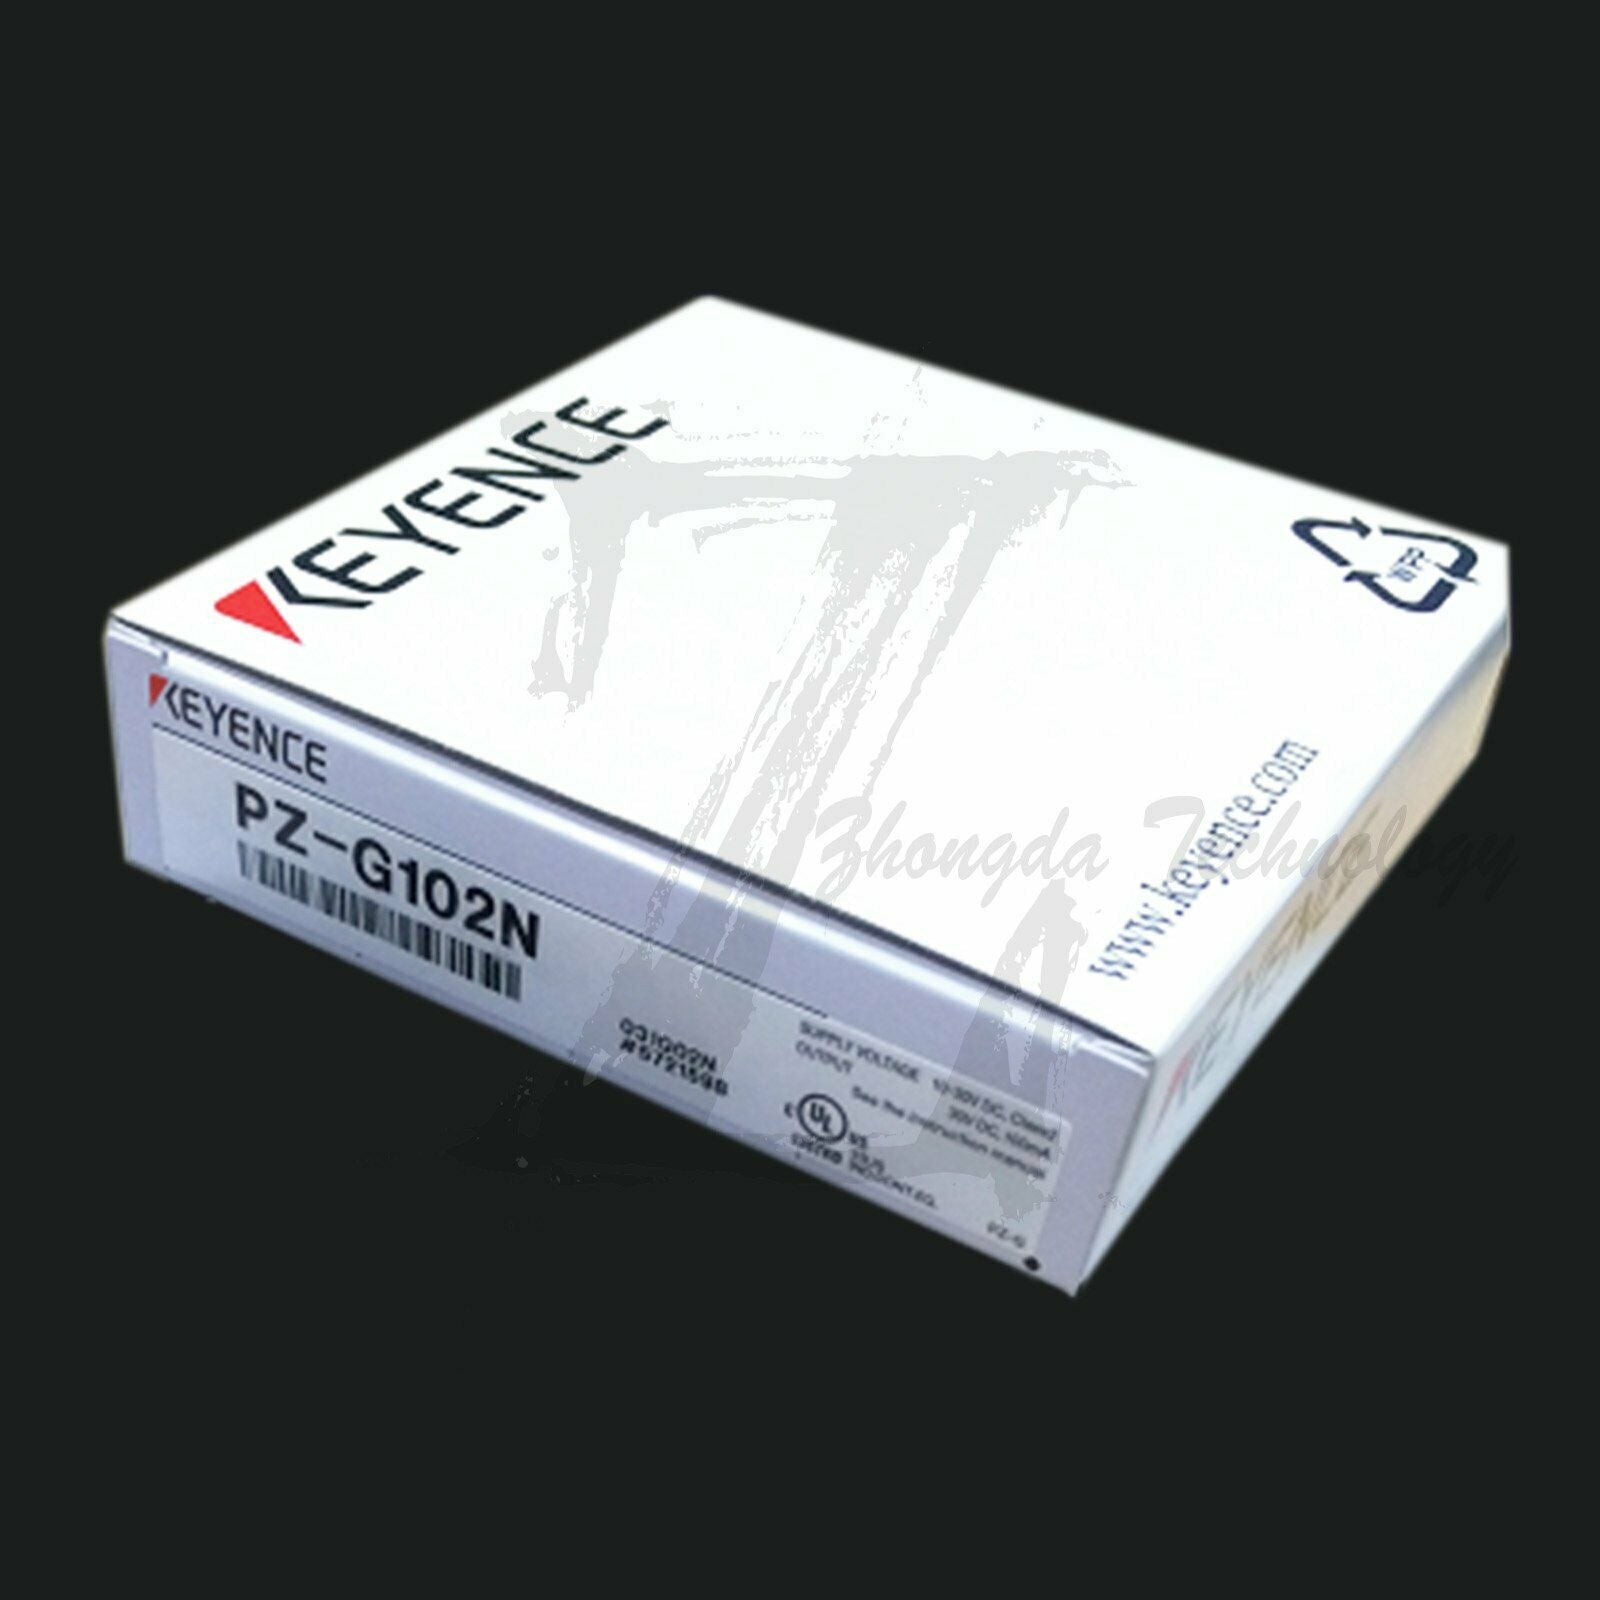 NEW IN BOX 1PCS Keyence Photoelectric Sensor PZ-G102N